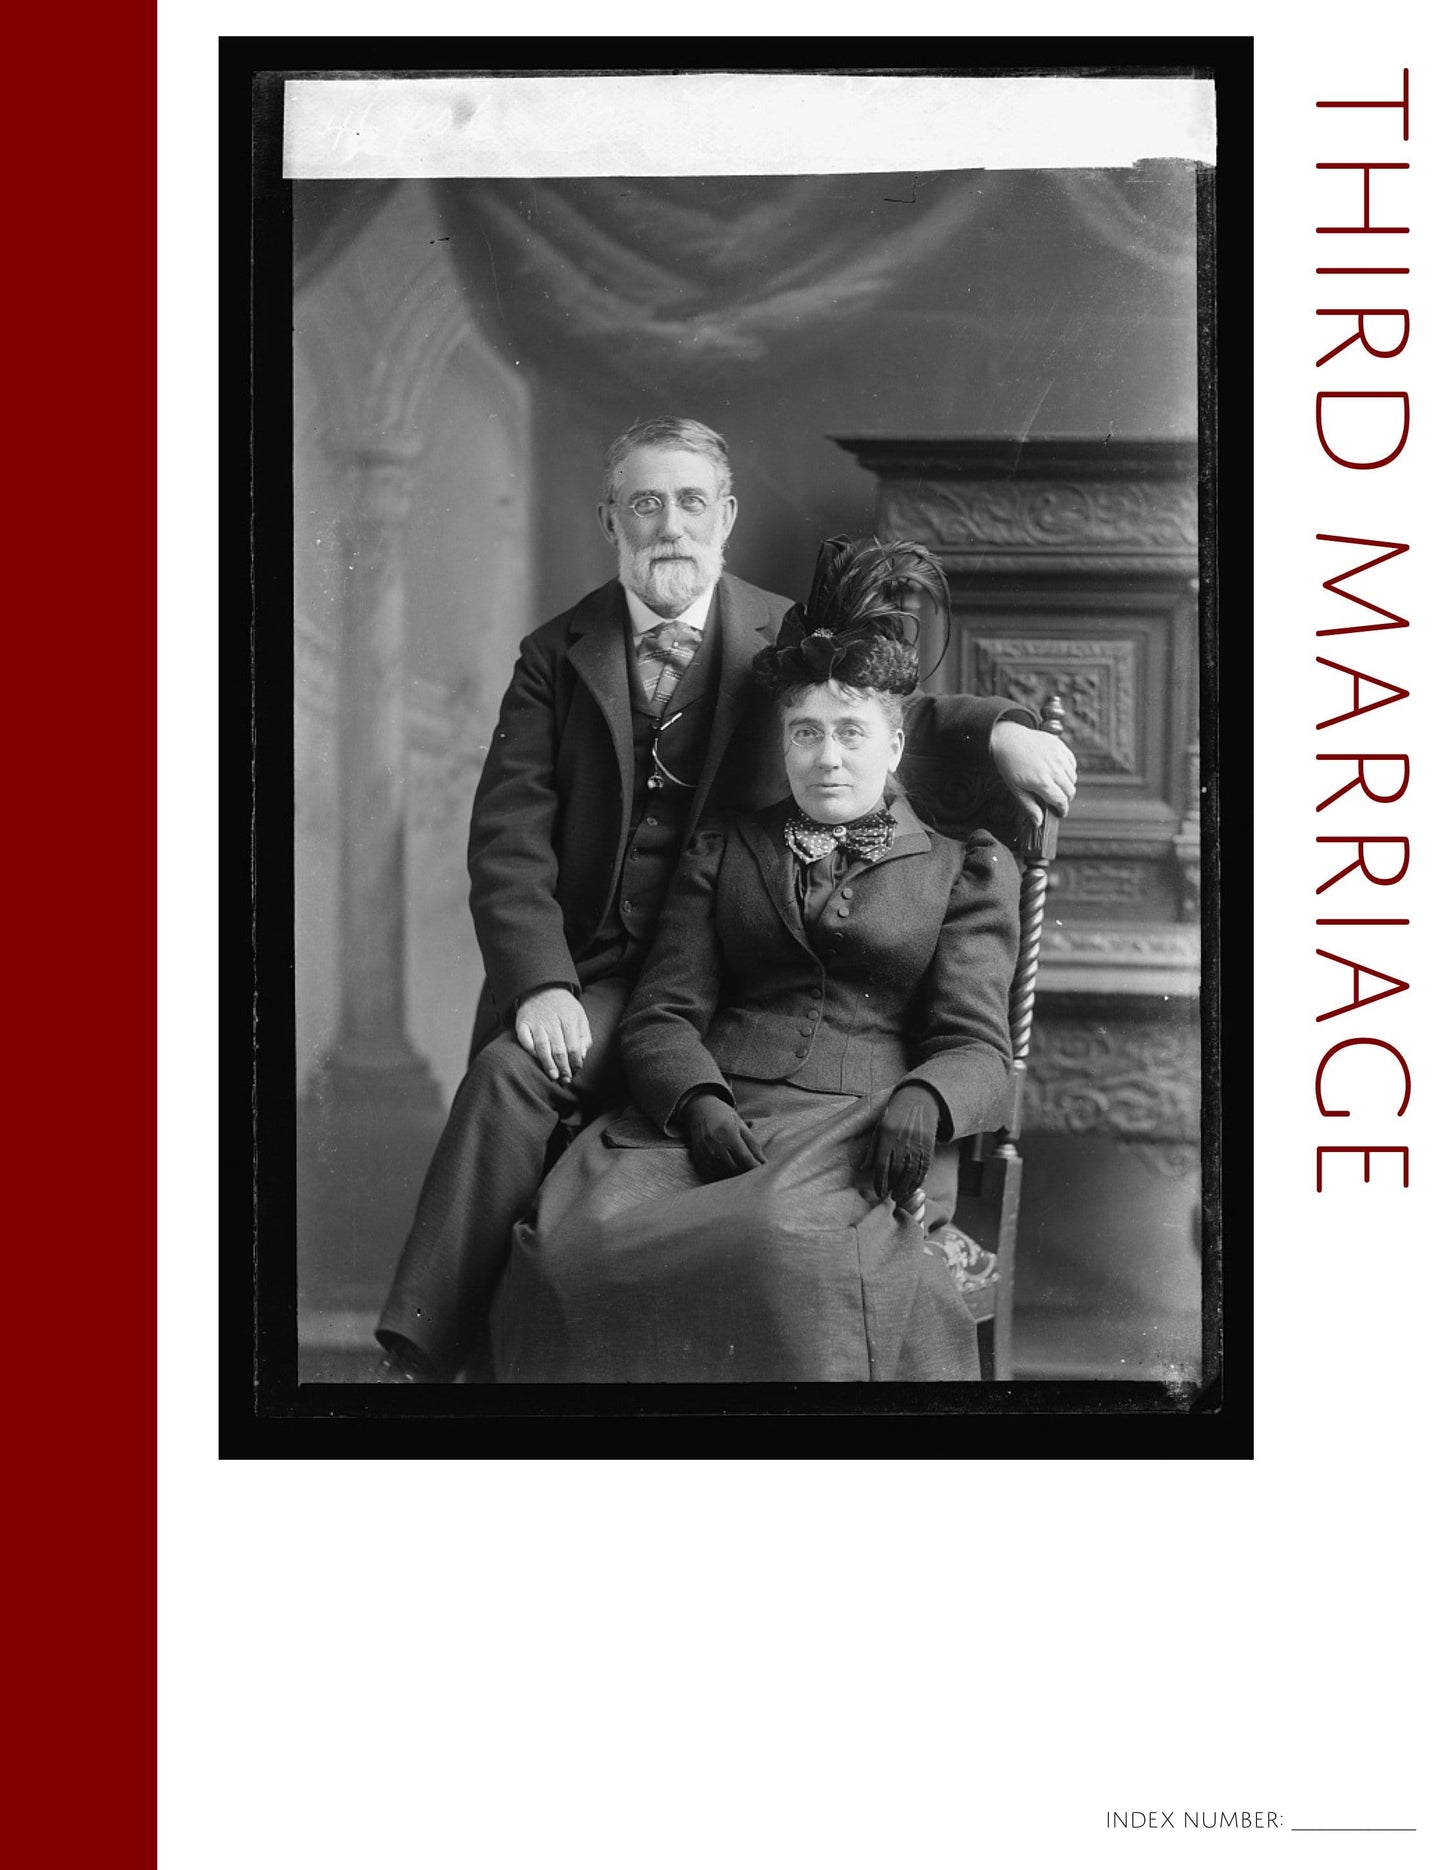 Third Marriage: Printable Genealogy Form (Digital Download)